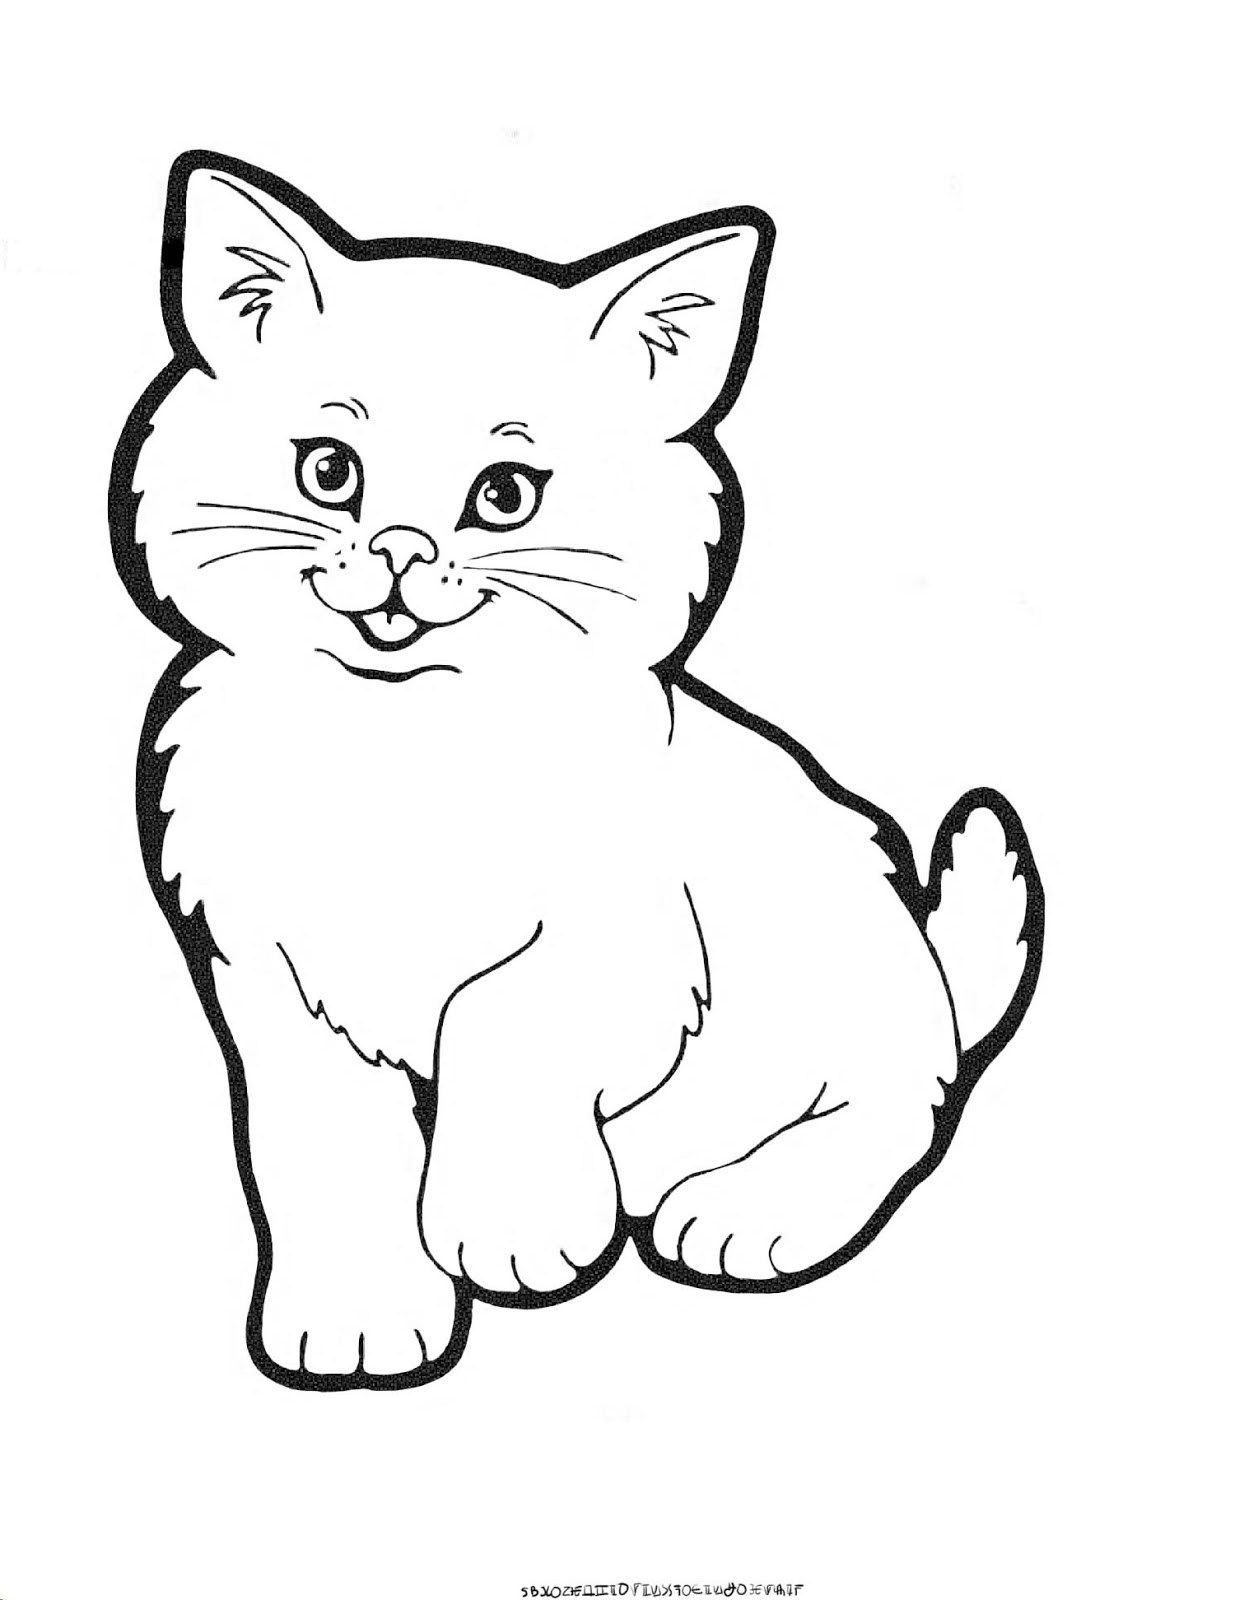 Котик рисунок раскраска